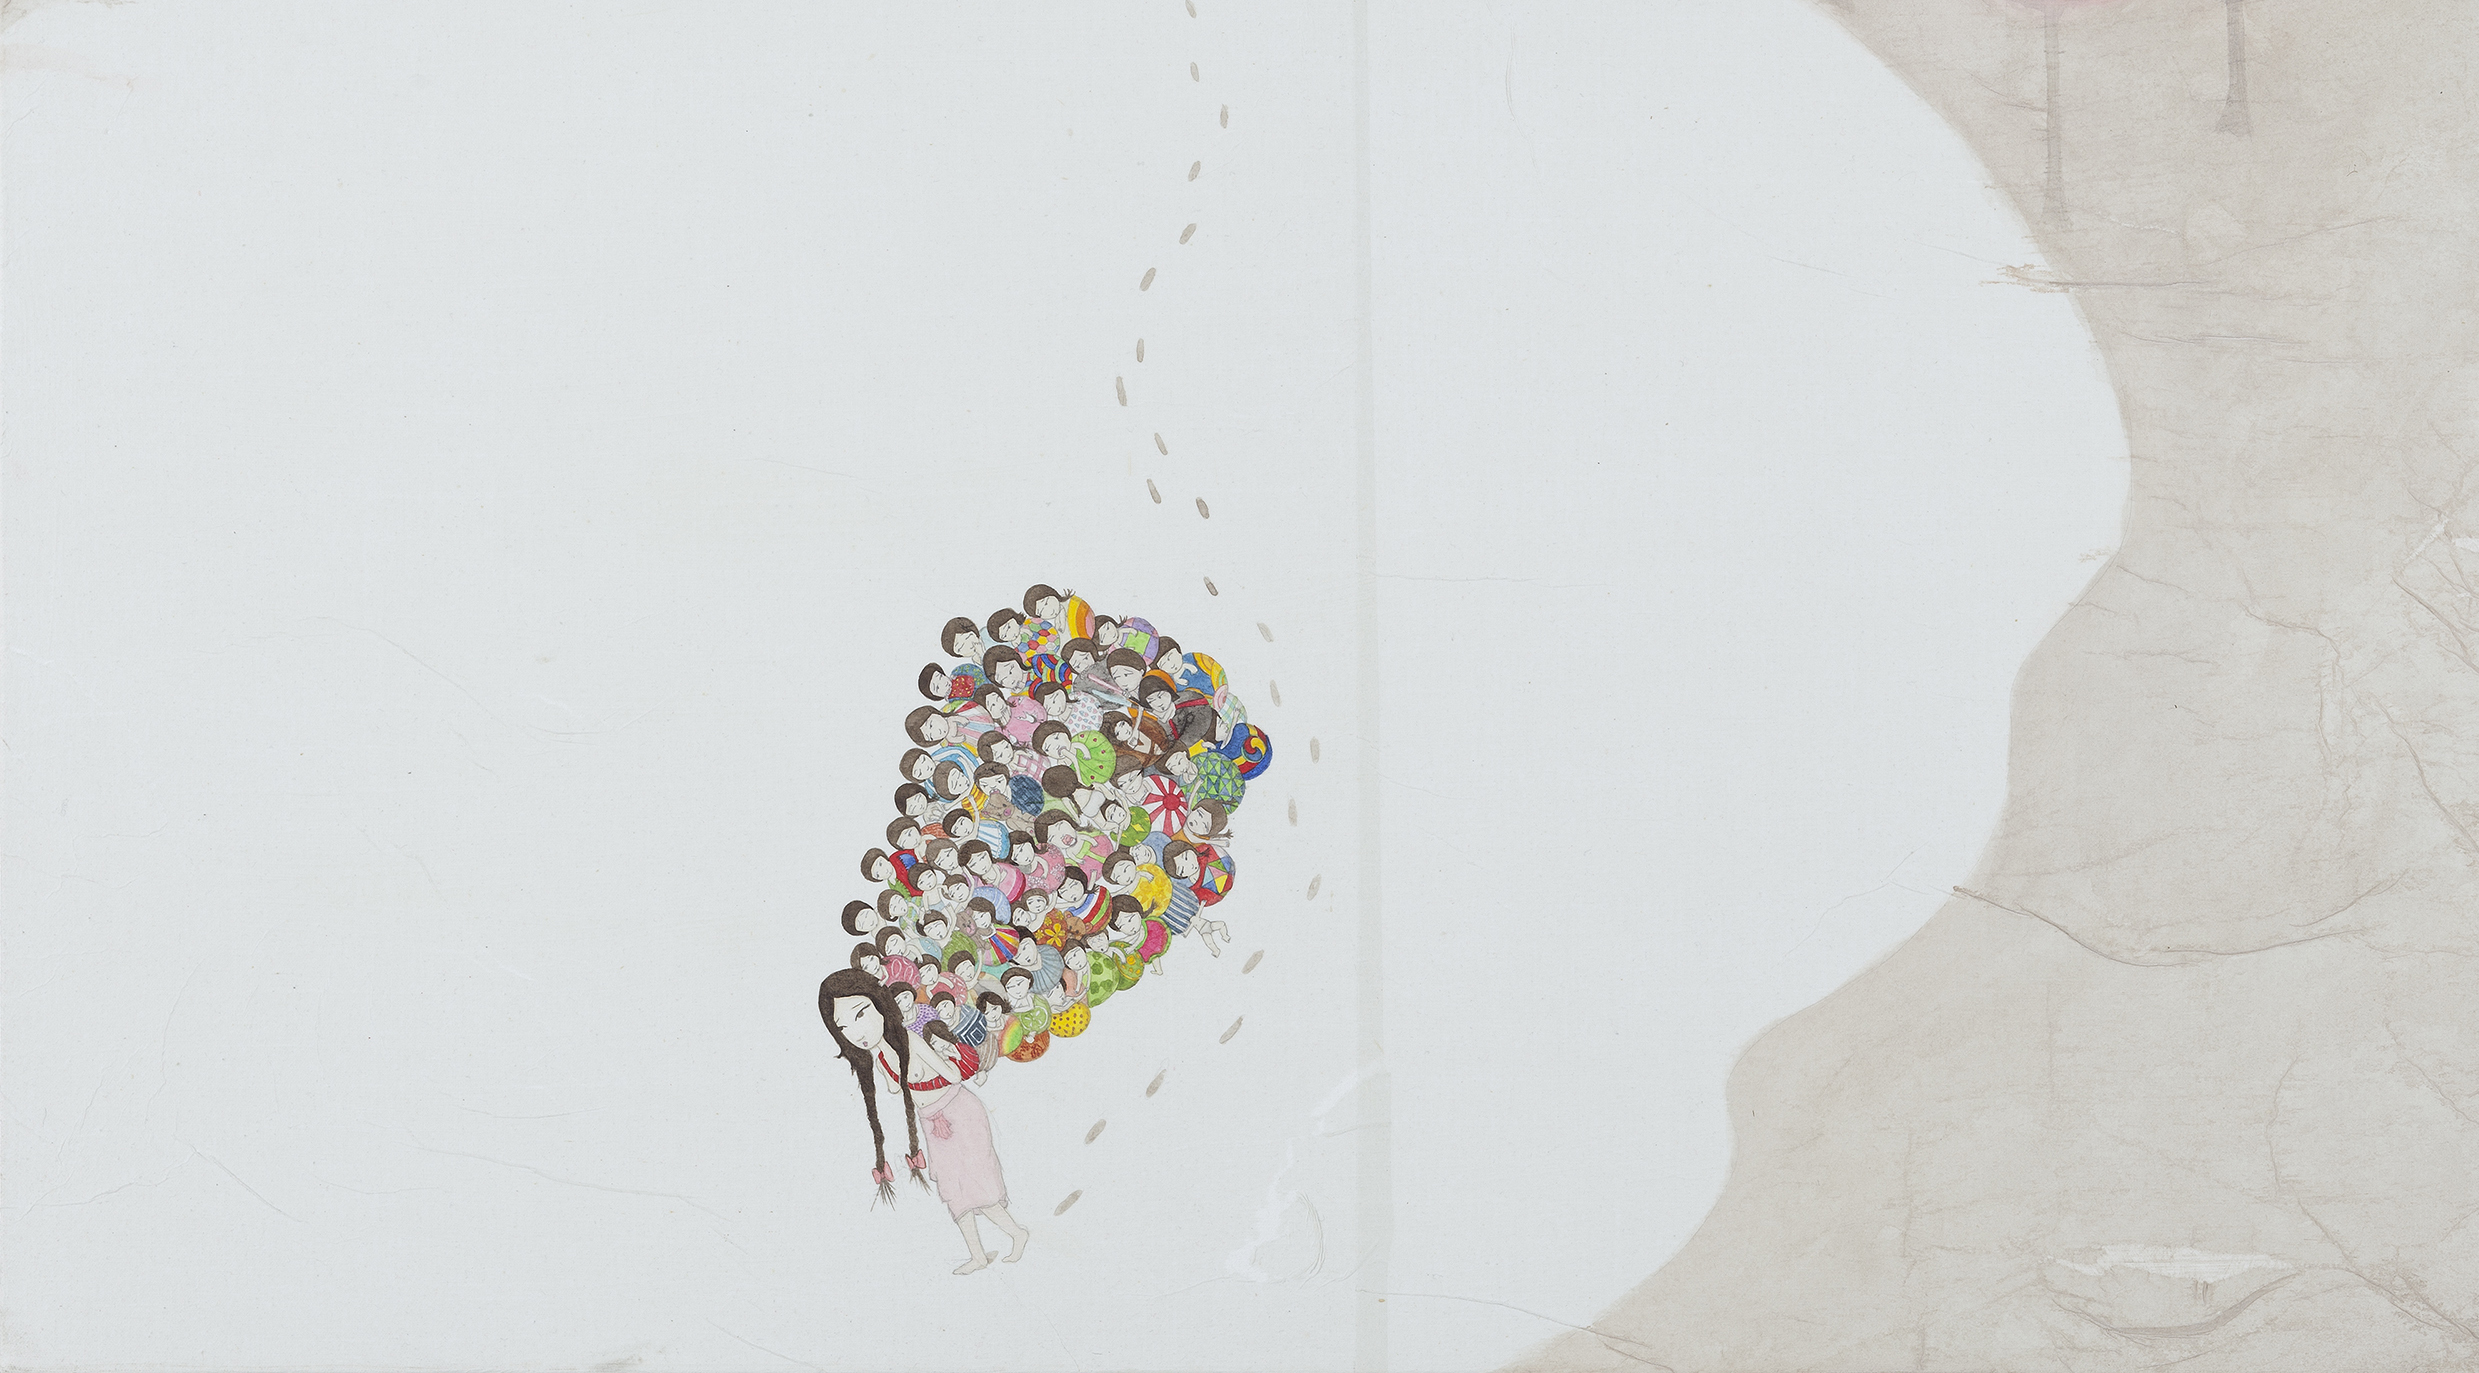 Artwork by Kyung Jeon titled Podegi Pink Trees, 2012